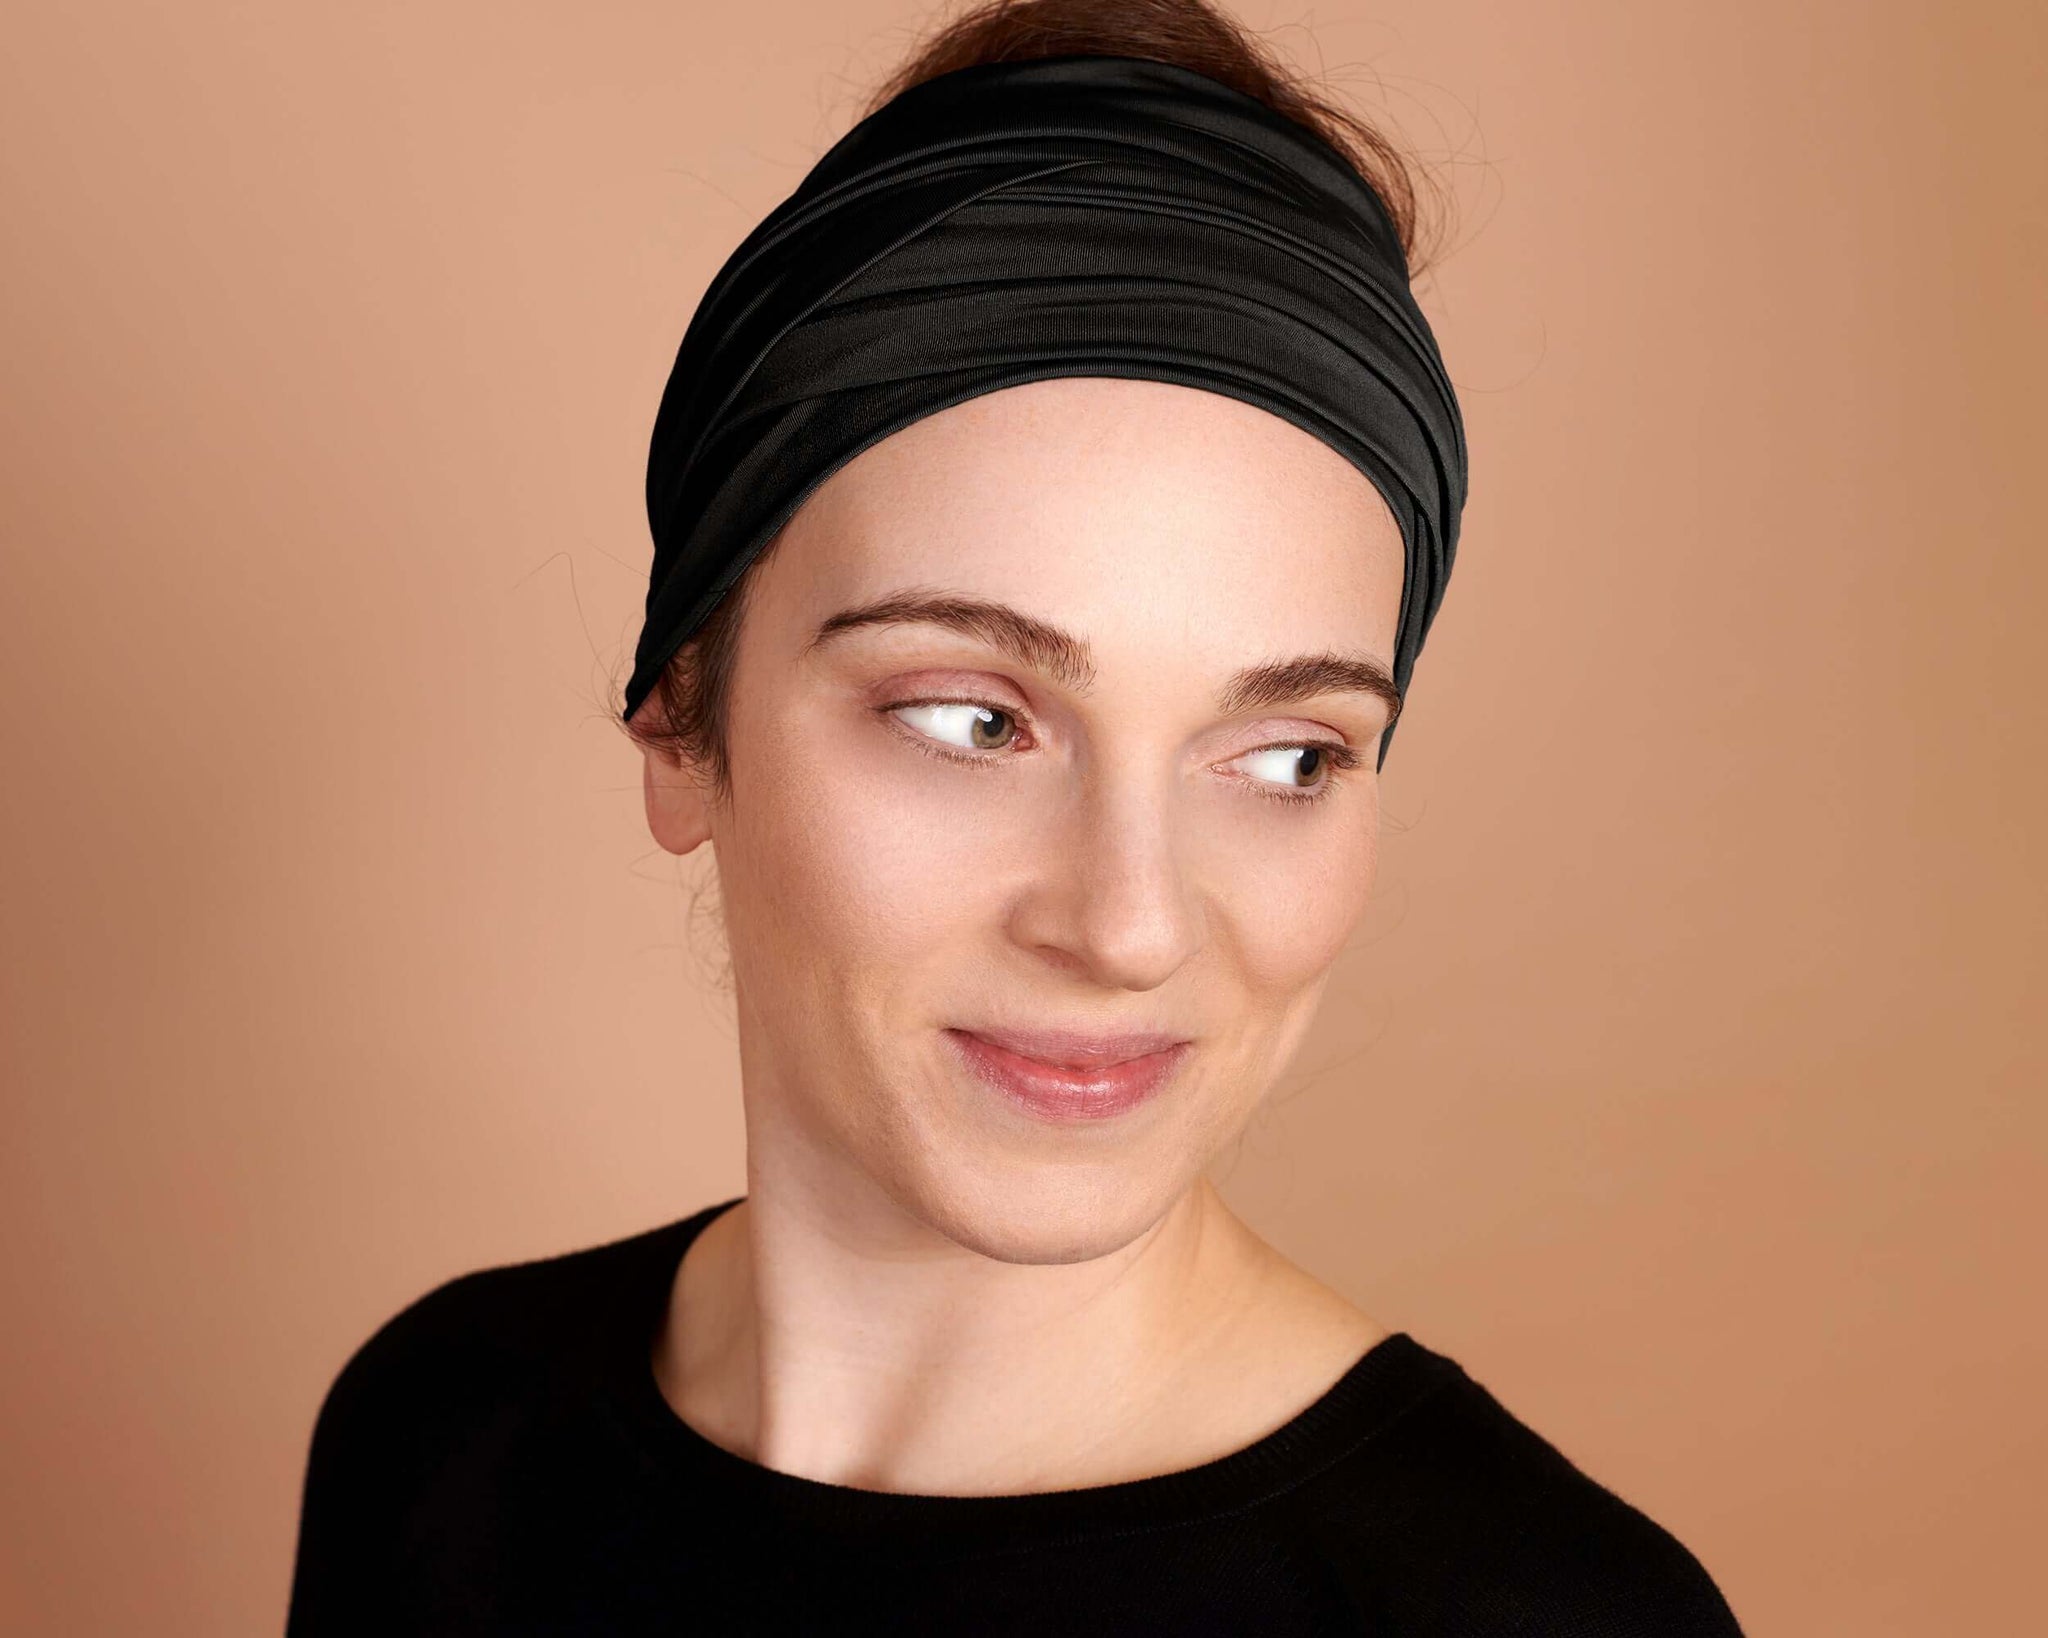 Boho Hair Wrap Headband for Women - Black Wide Headband for Curly, Wavy, and Straight Hair